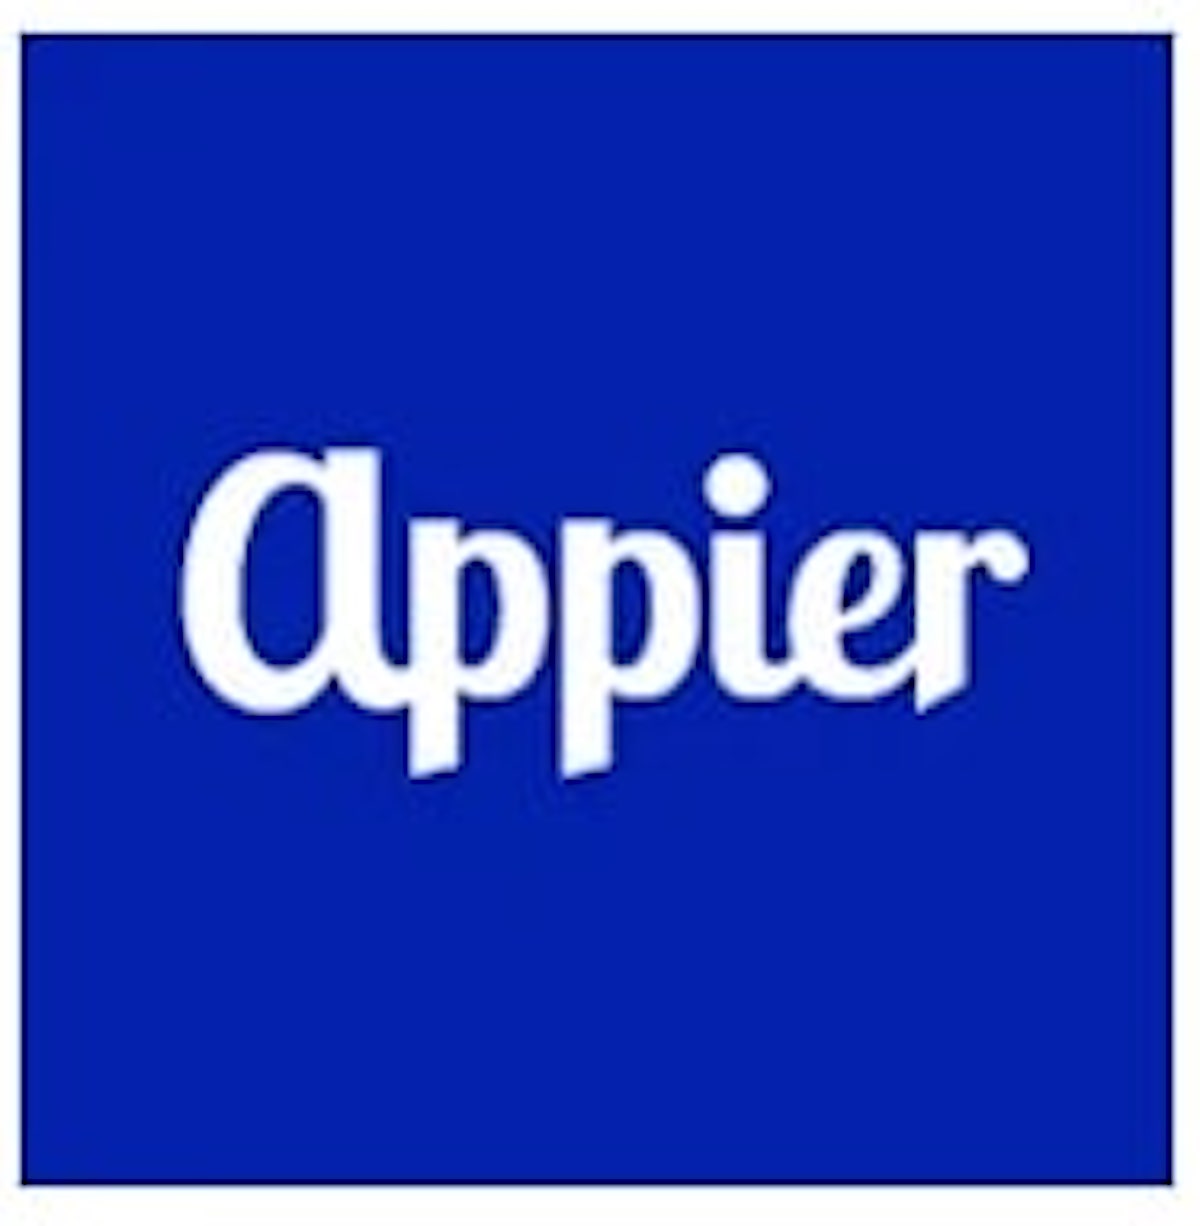 Appier Group、東証プライム市場へ移行　「クロスボーダー企業」としては初昇格